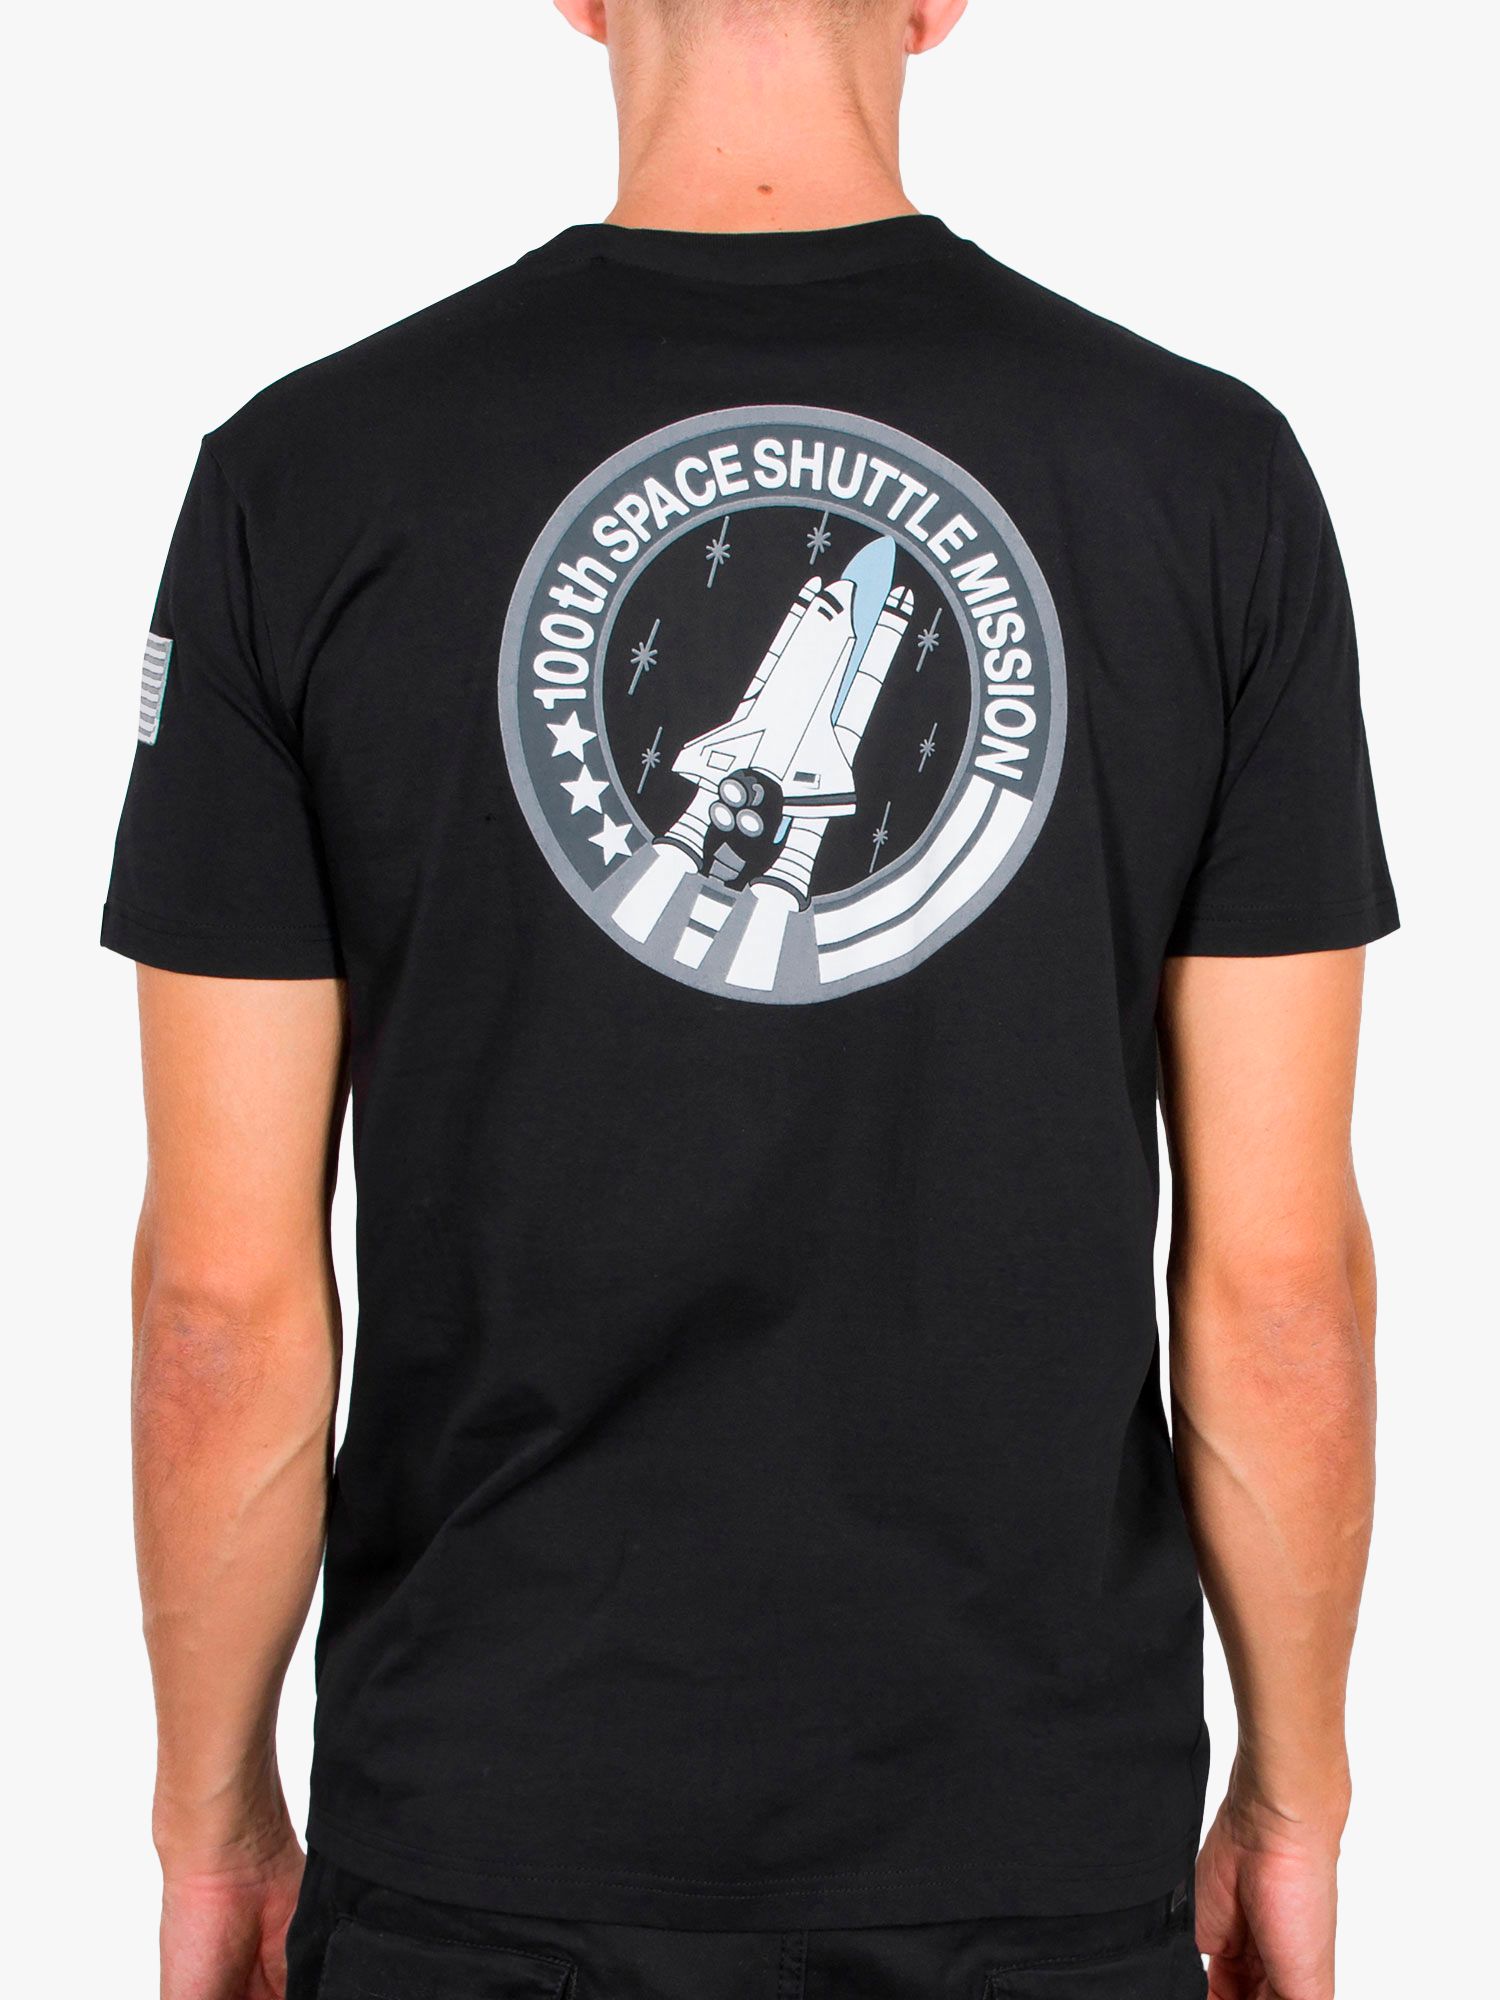 Alpha Industries X NASA Space Shuttle Logo Crew Neck T-Shirt, Black, XS